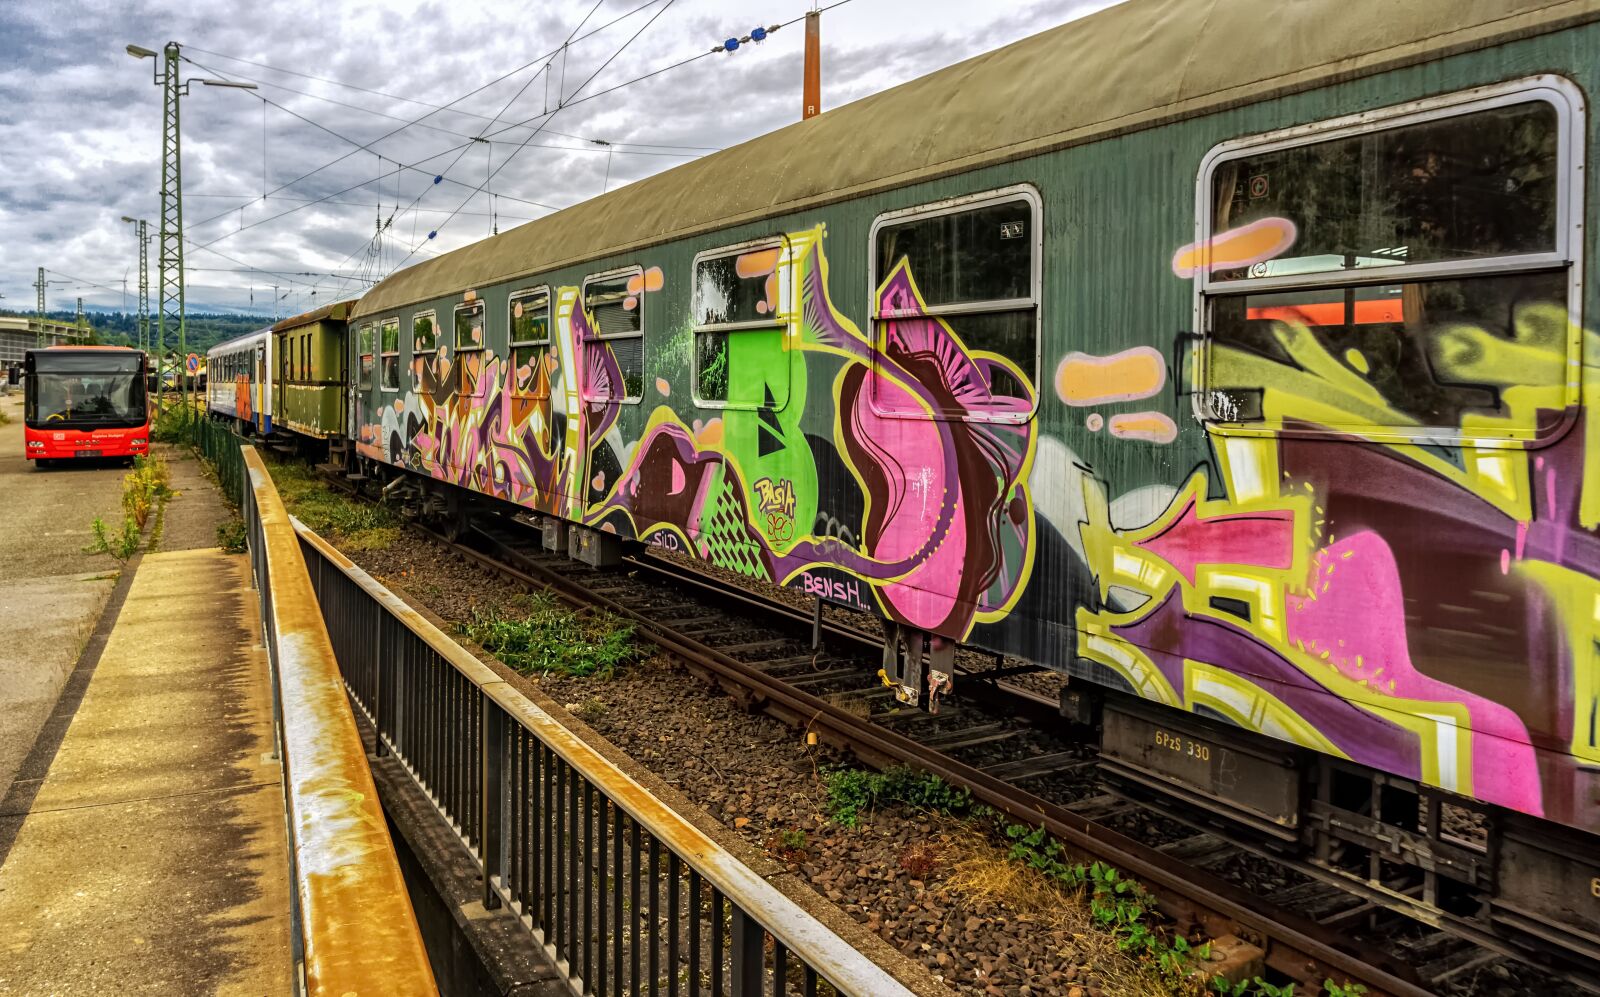 Sony a6000 sample photo. Wagon, train, graffiti photography